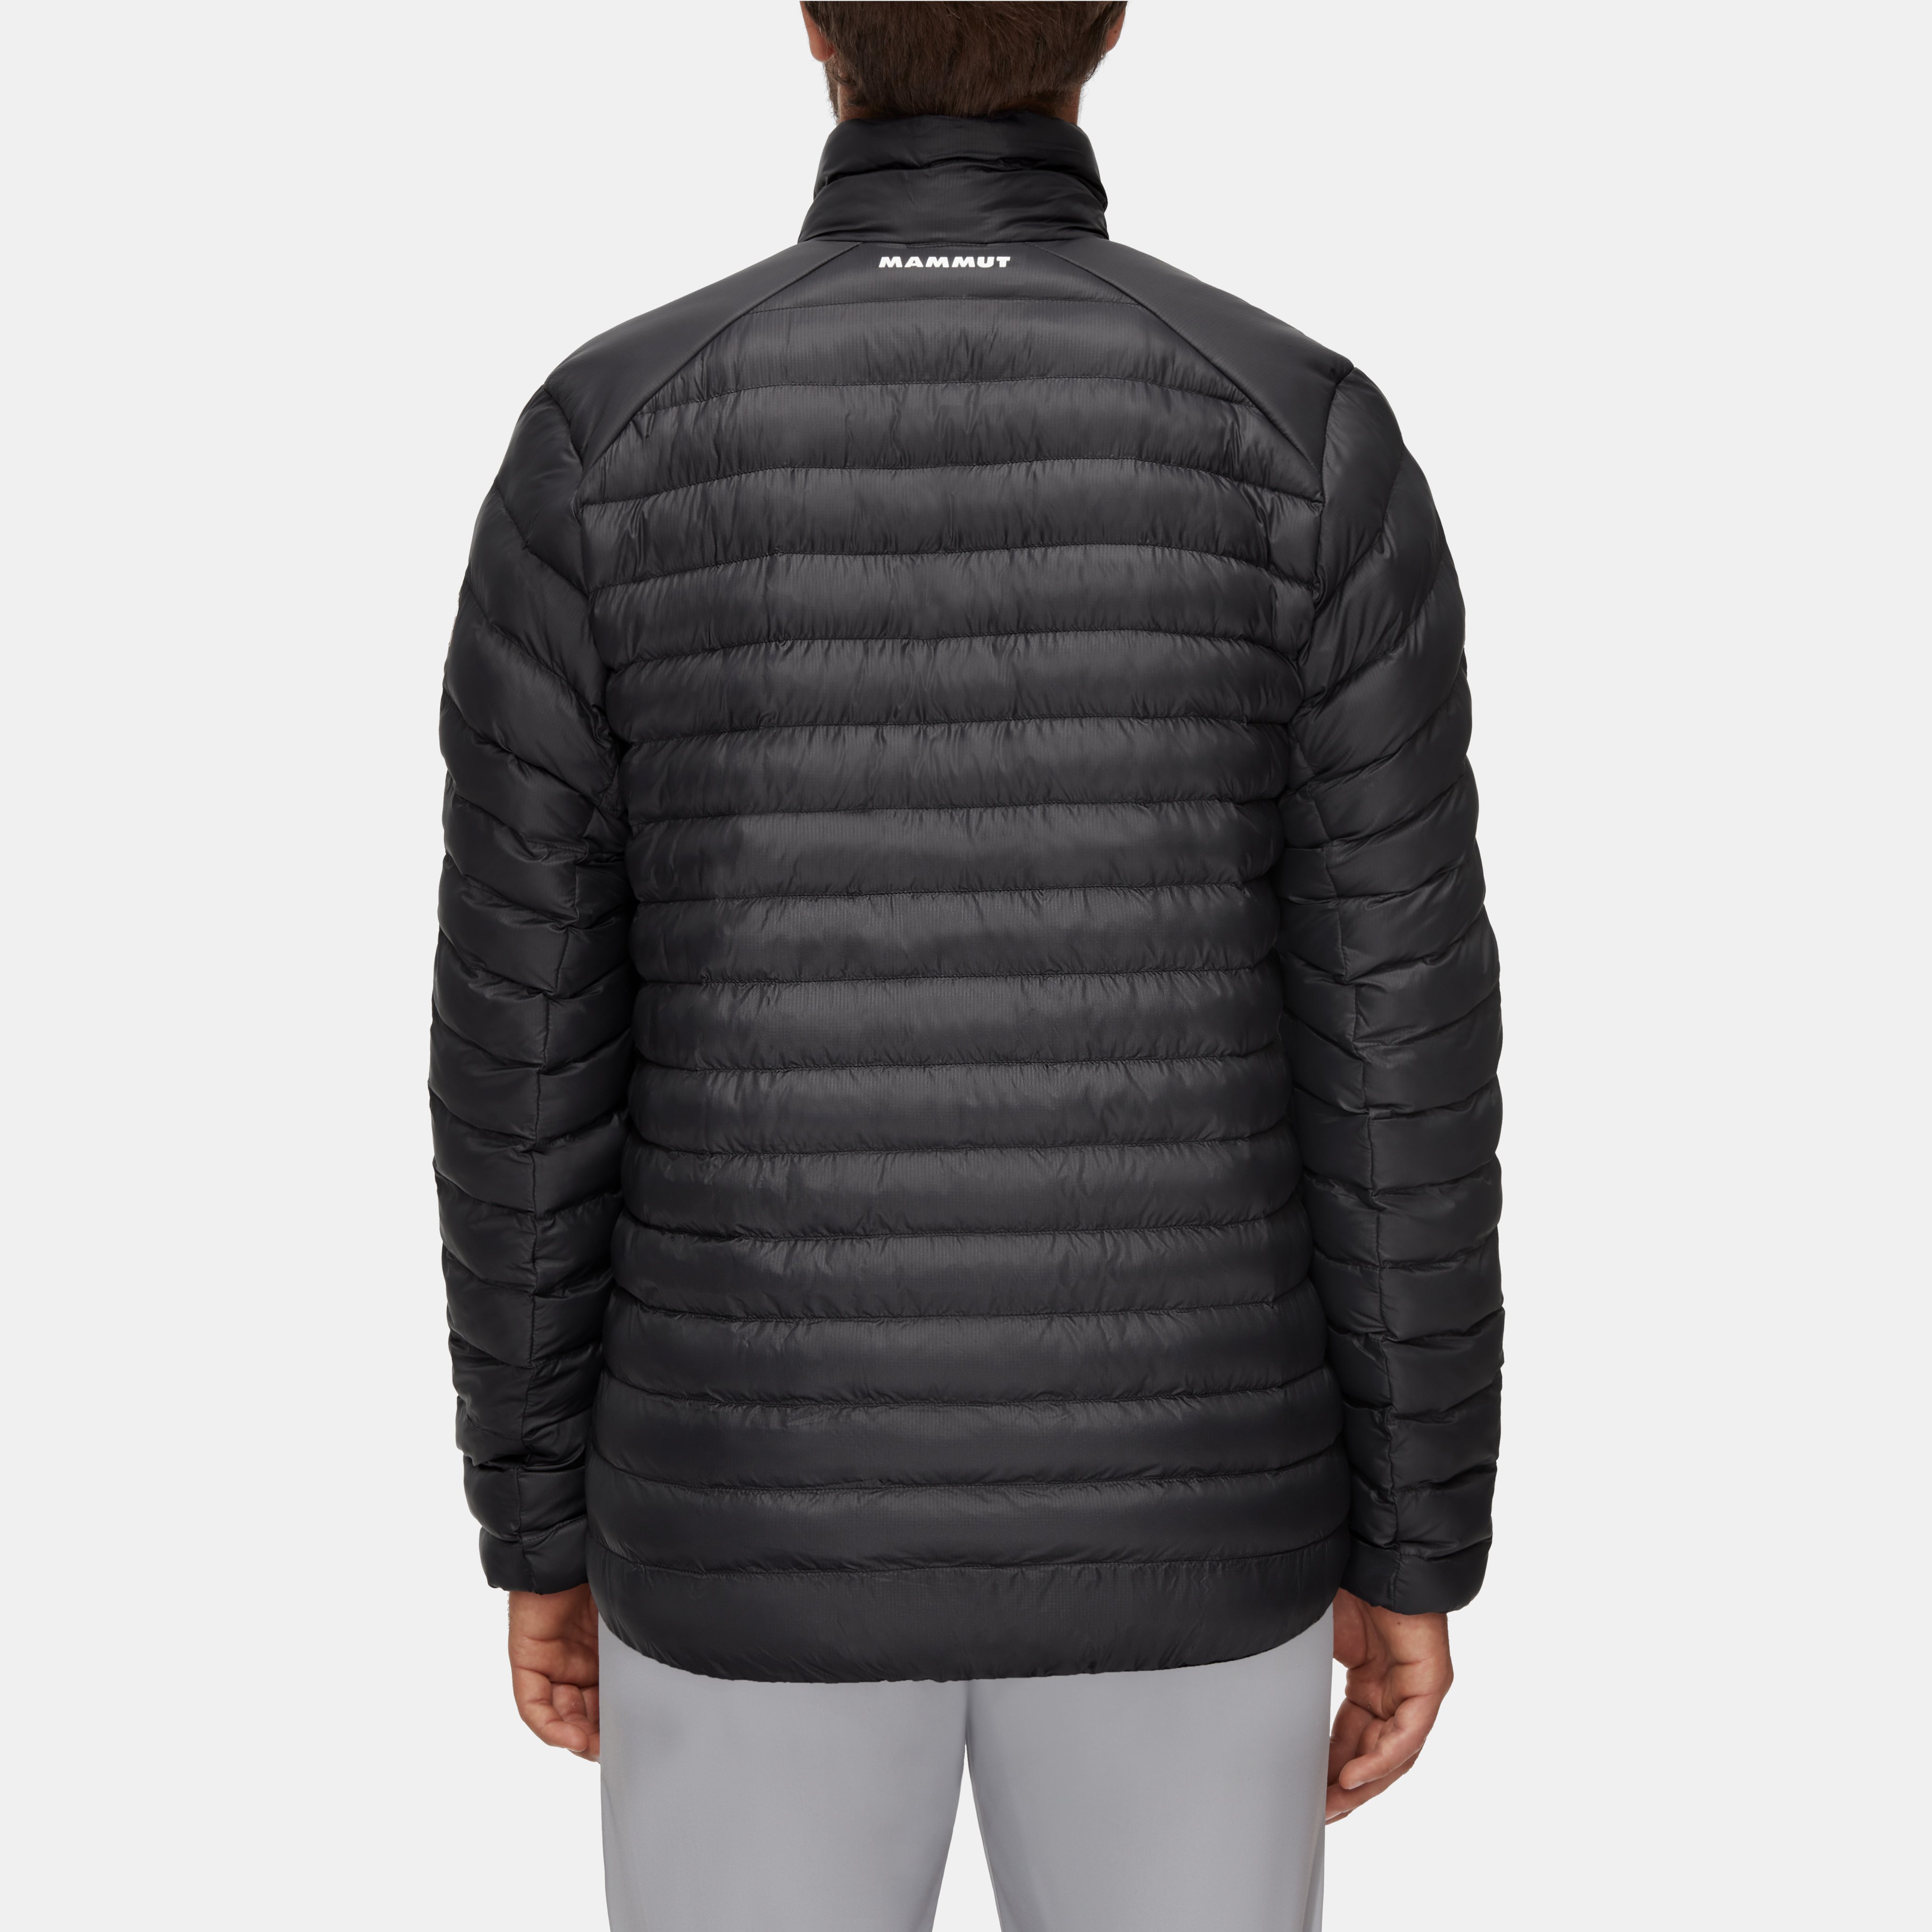 Albula IN Jacket Men product image